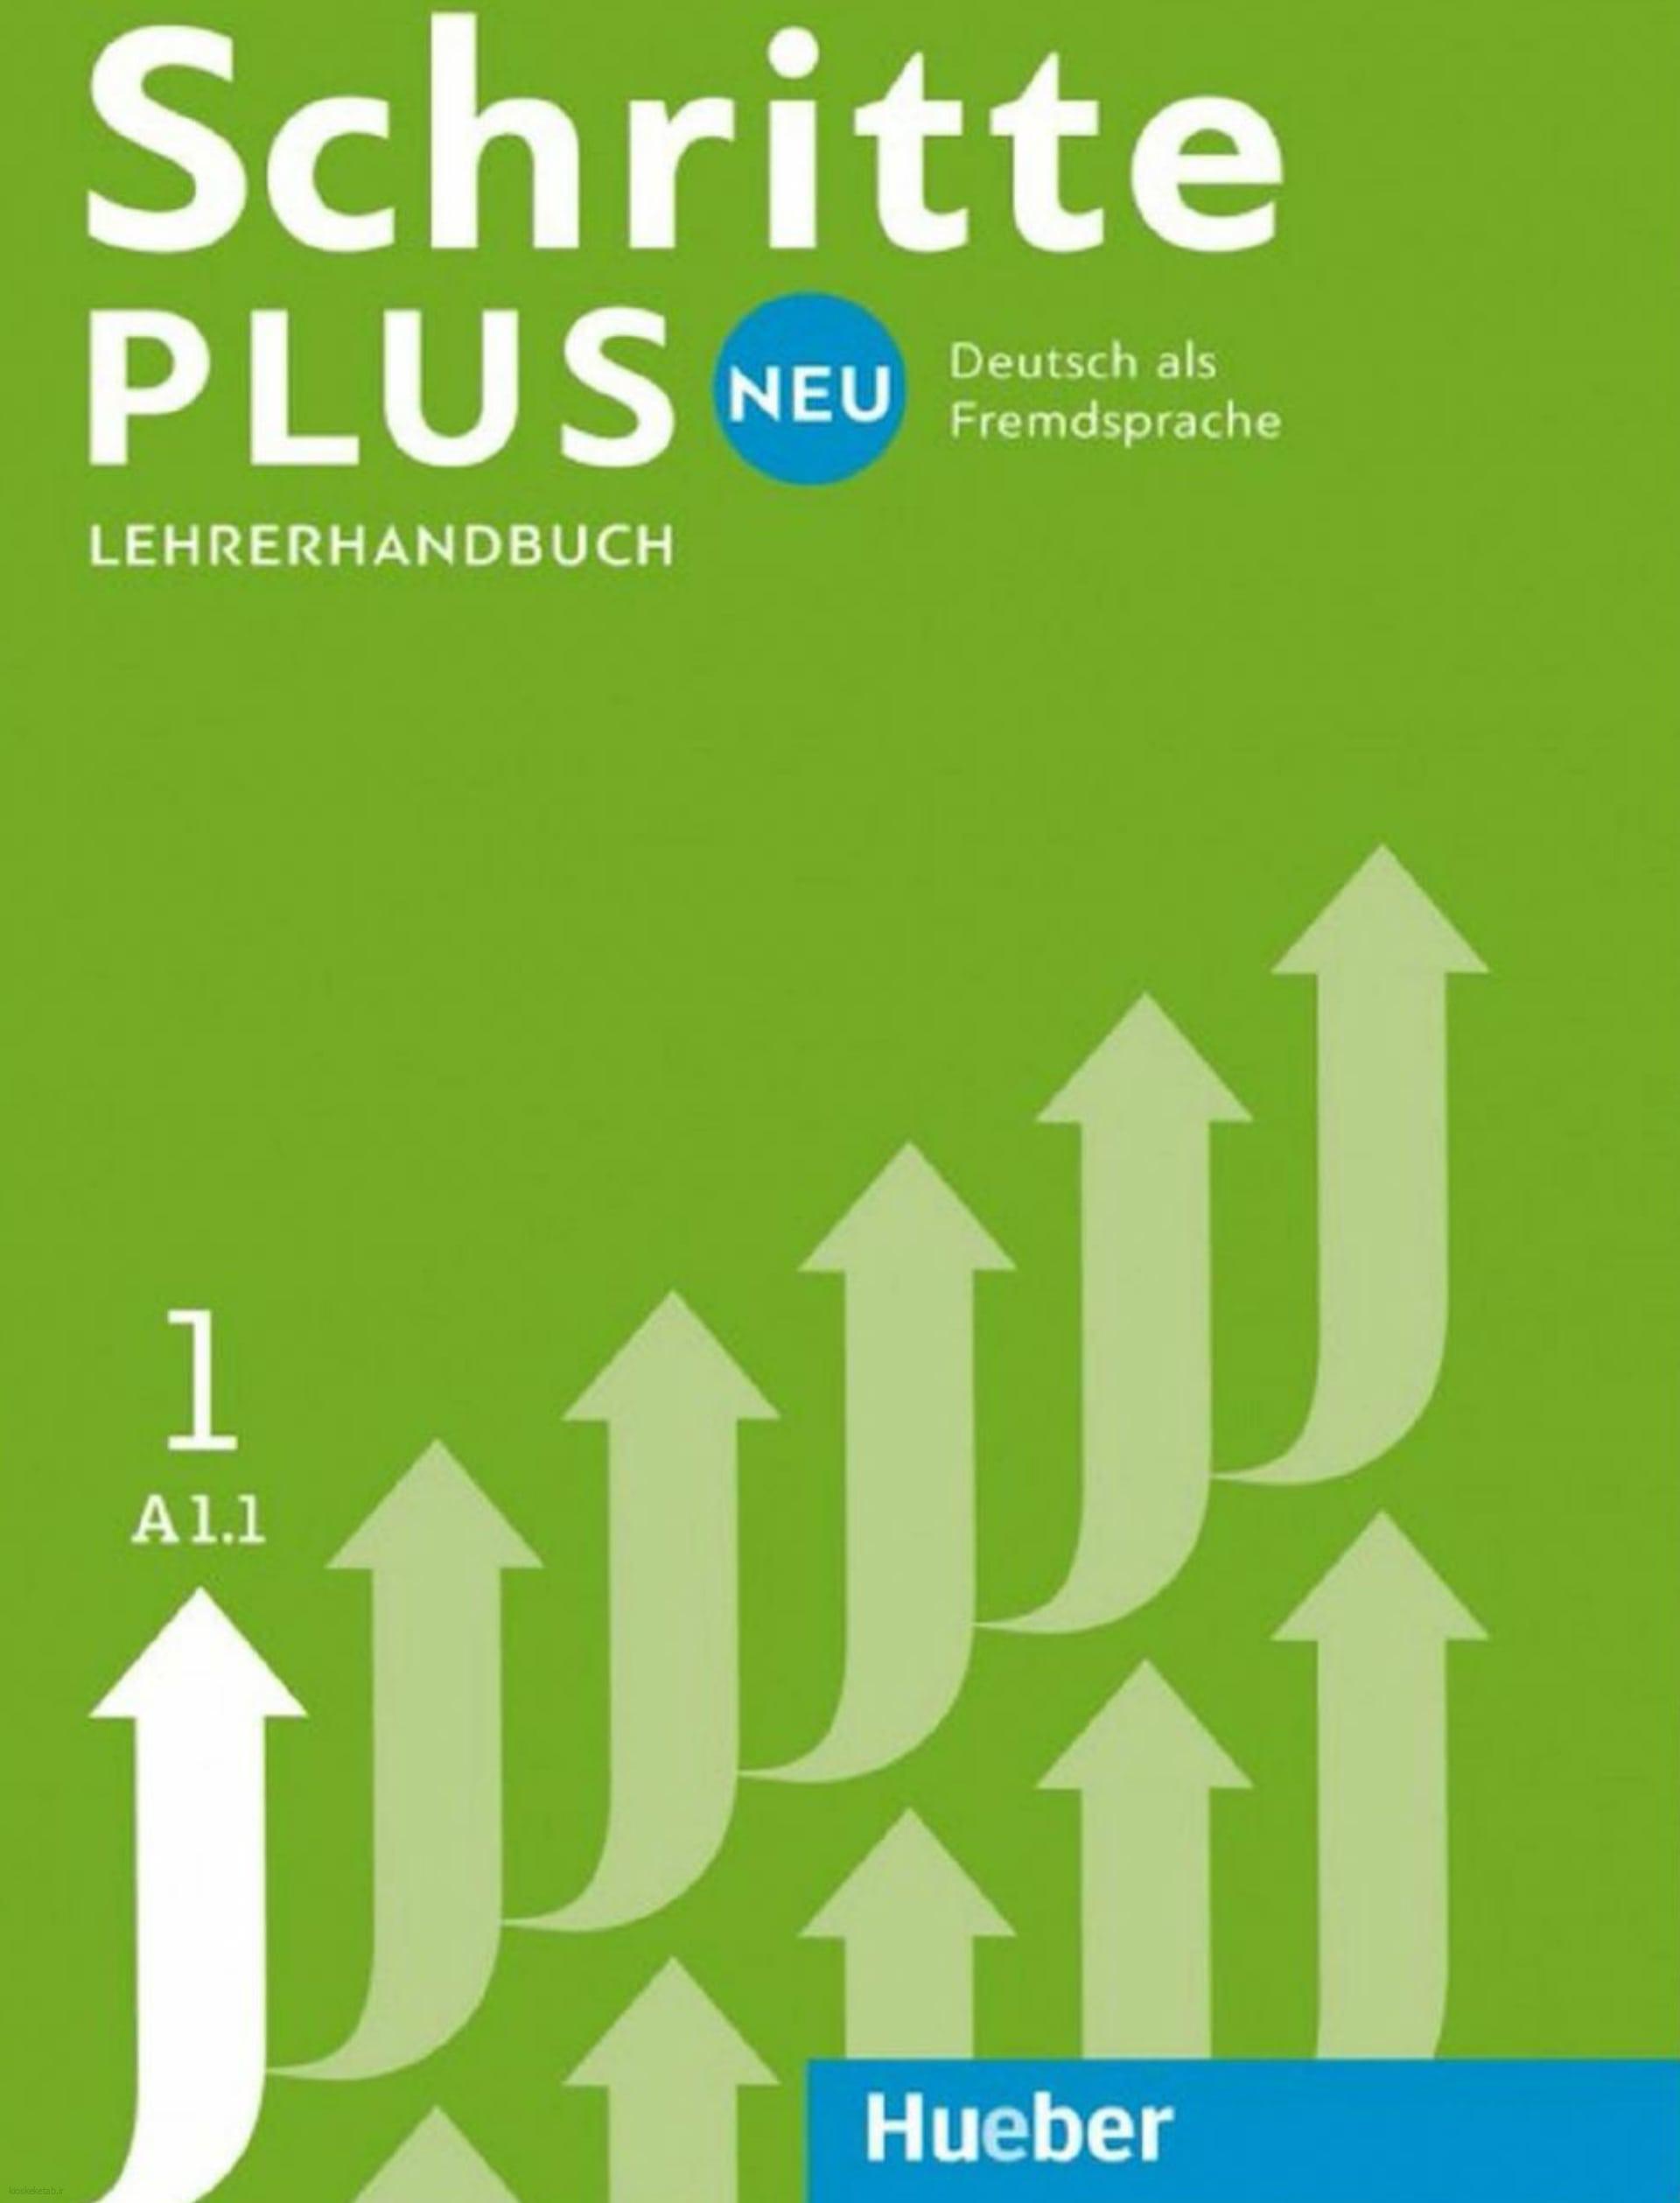 دانلود کتاب آلمانیschritte plus neu a1.1